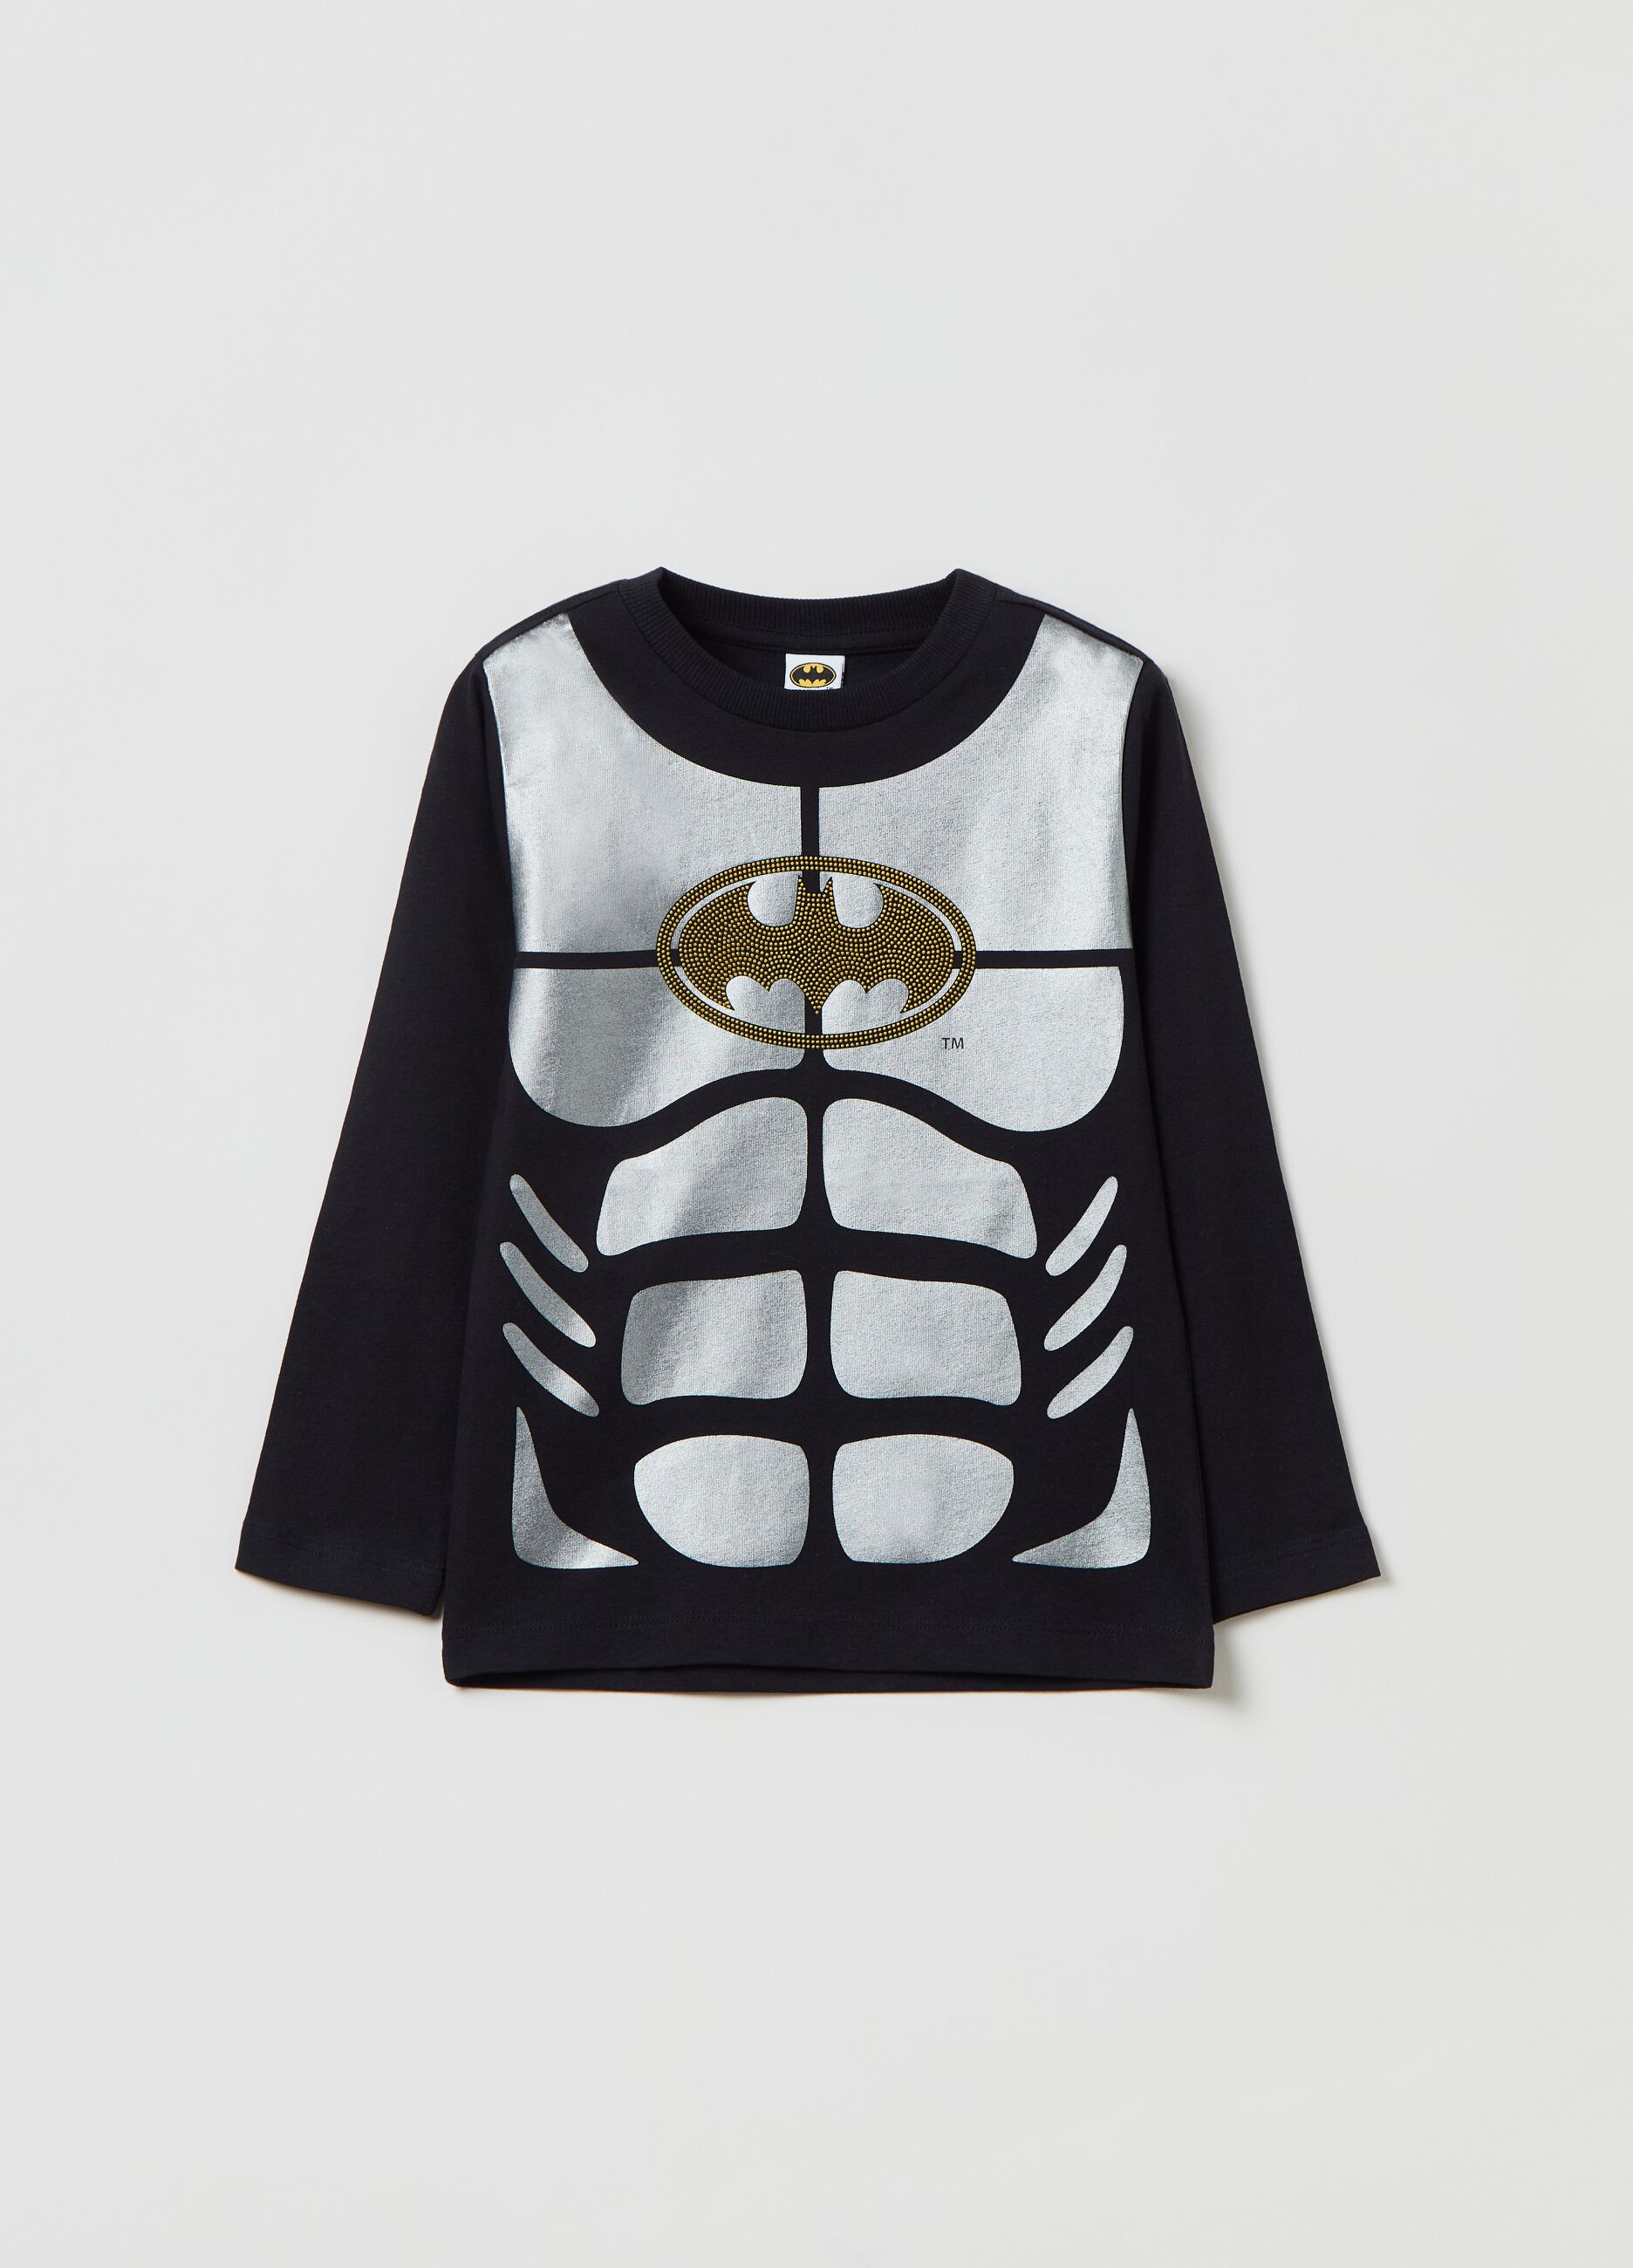 Camiseta de manga larga estampado Batman